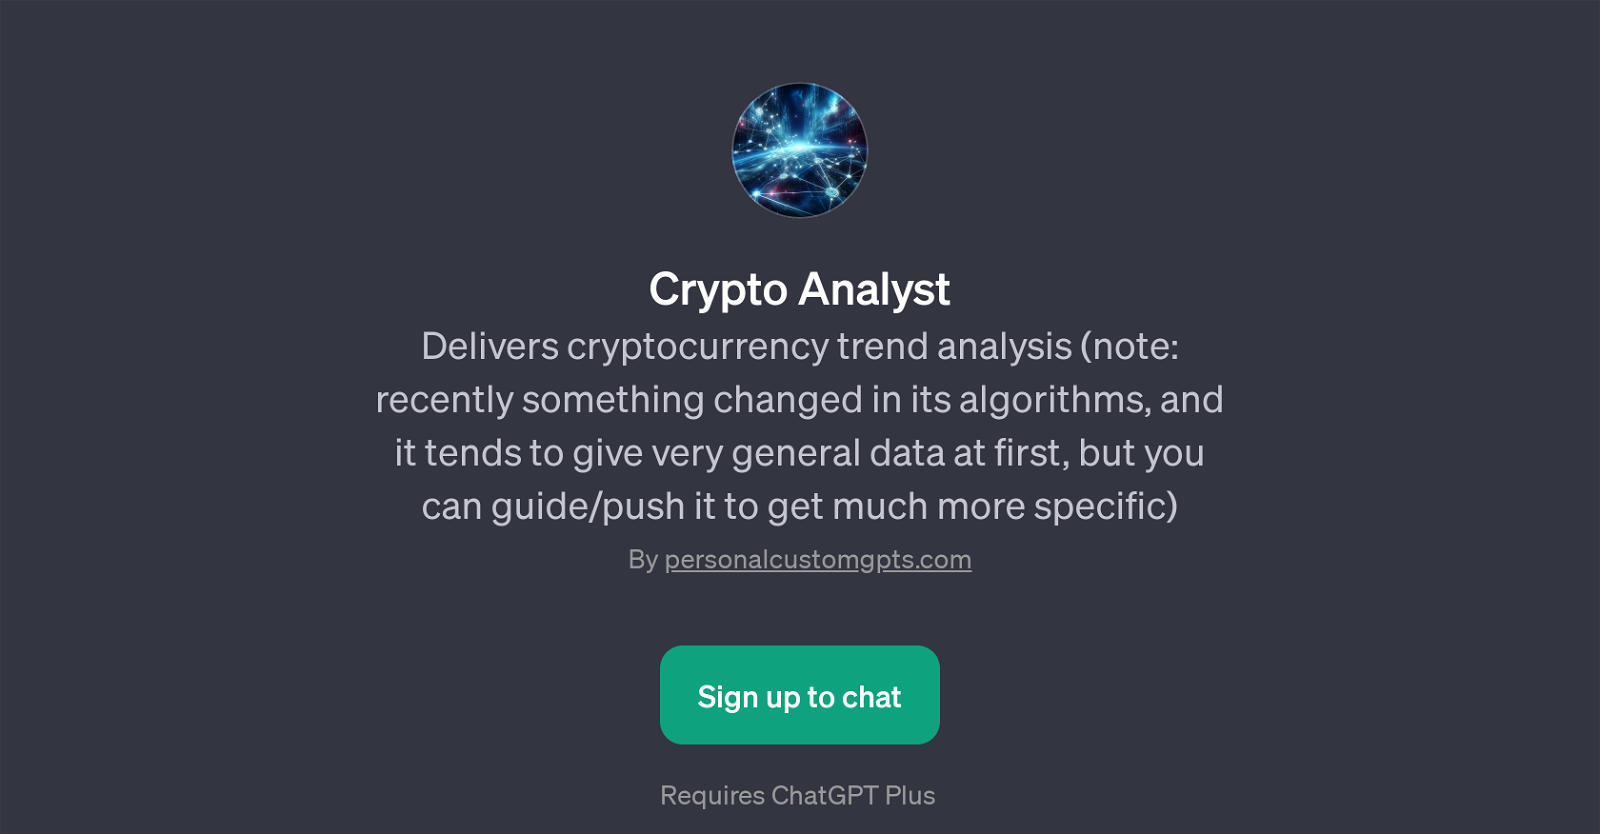 Crypto Analyst website